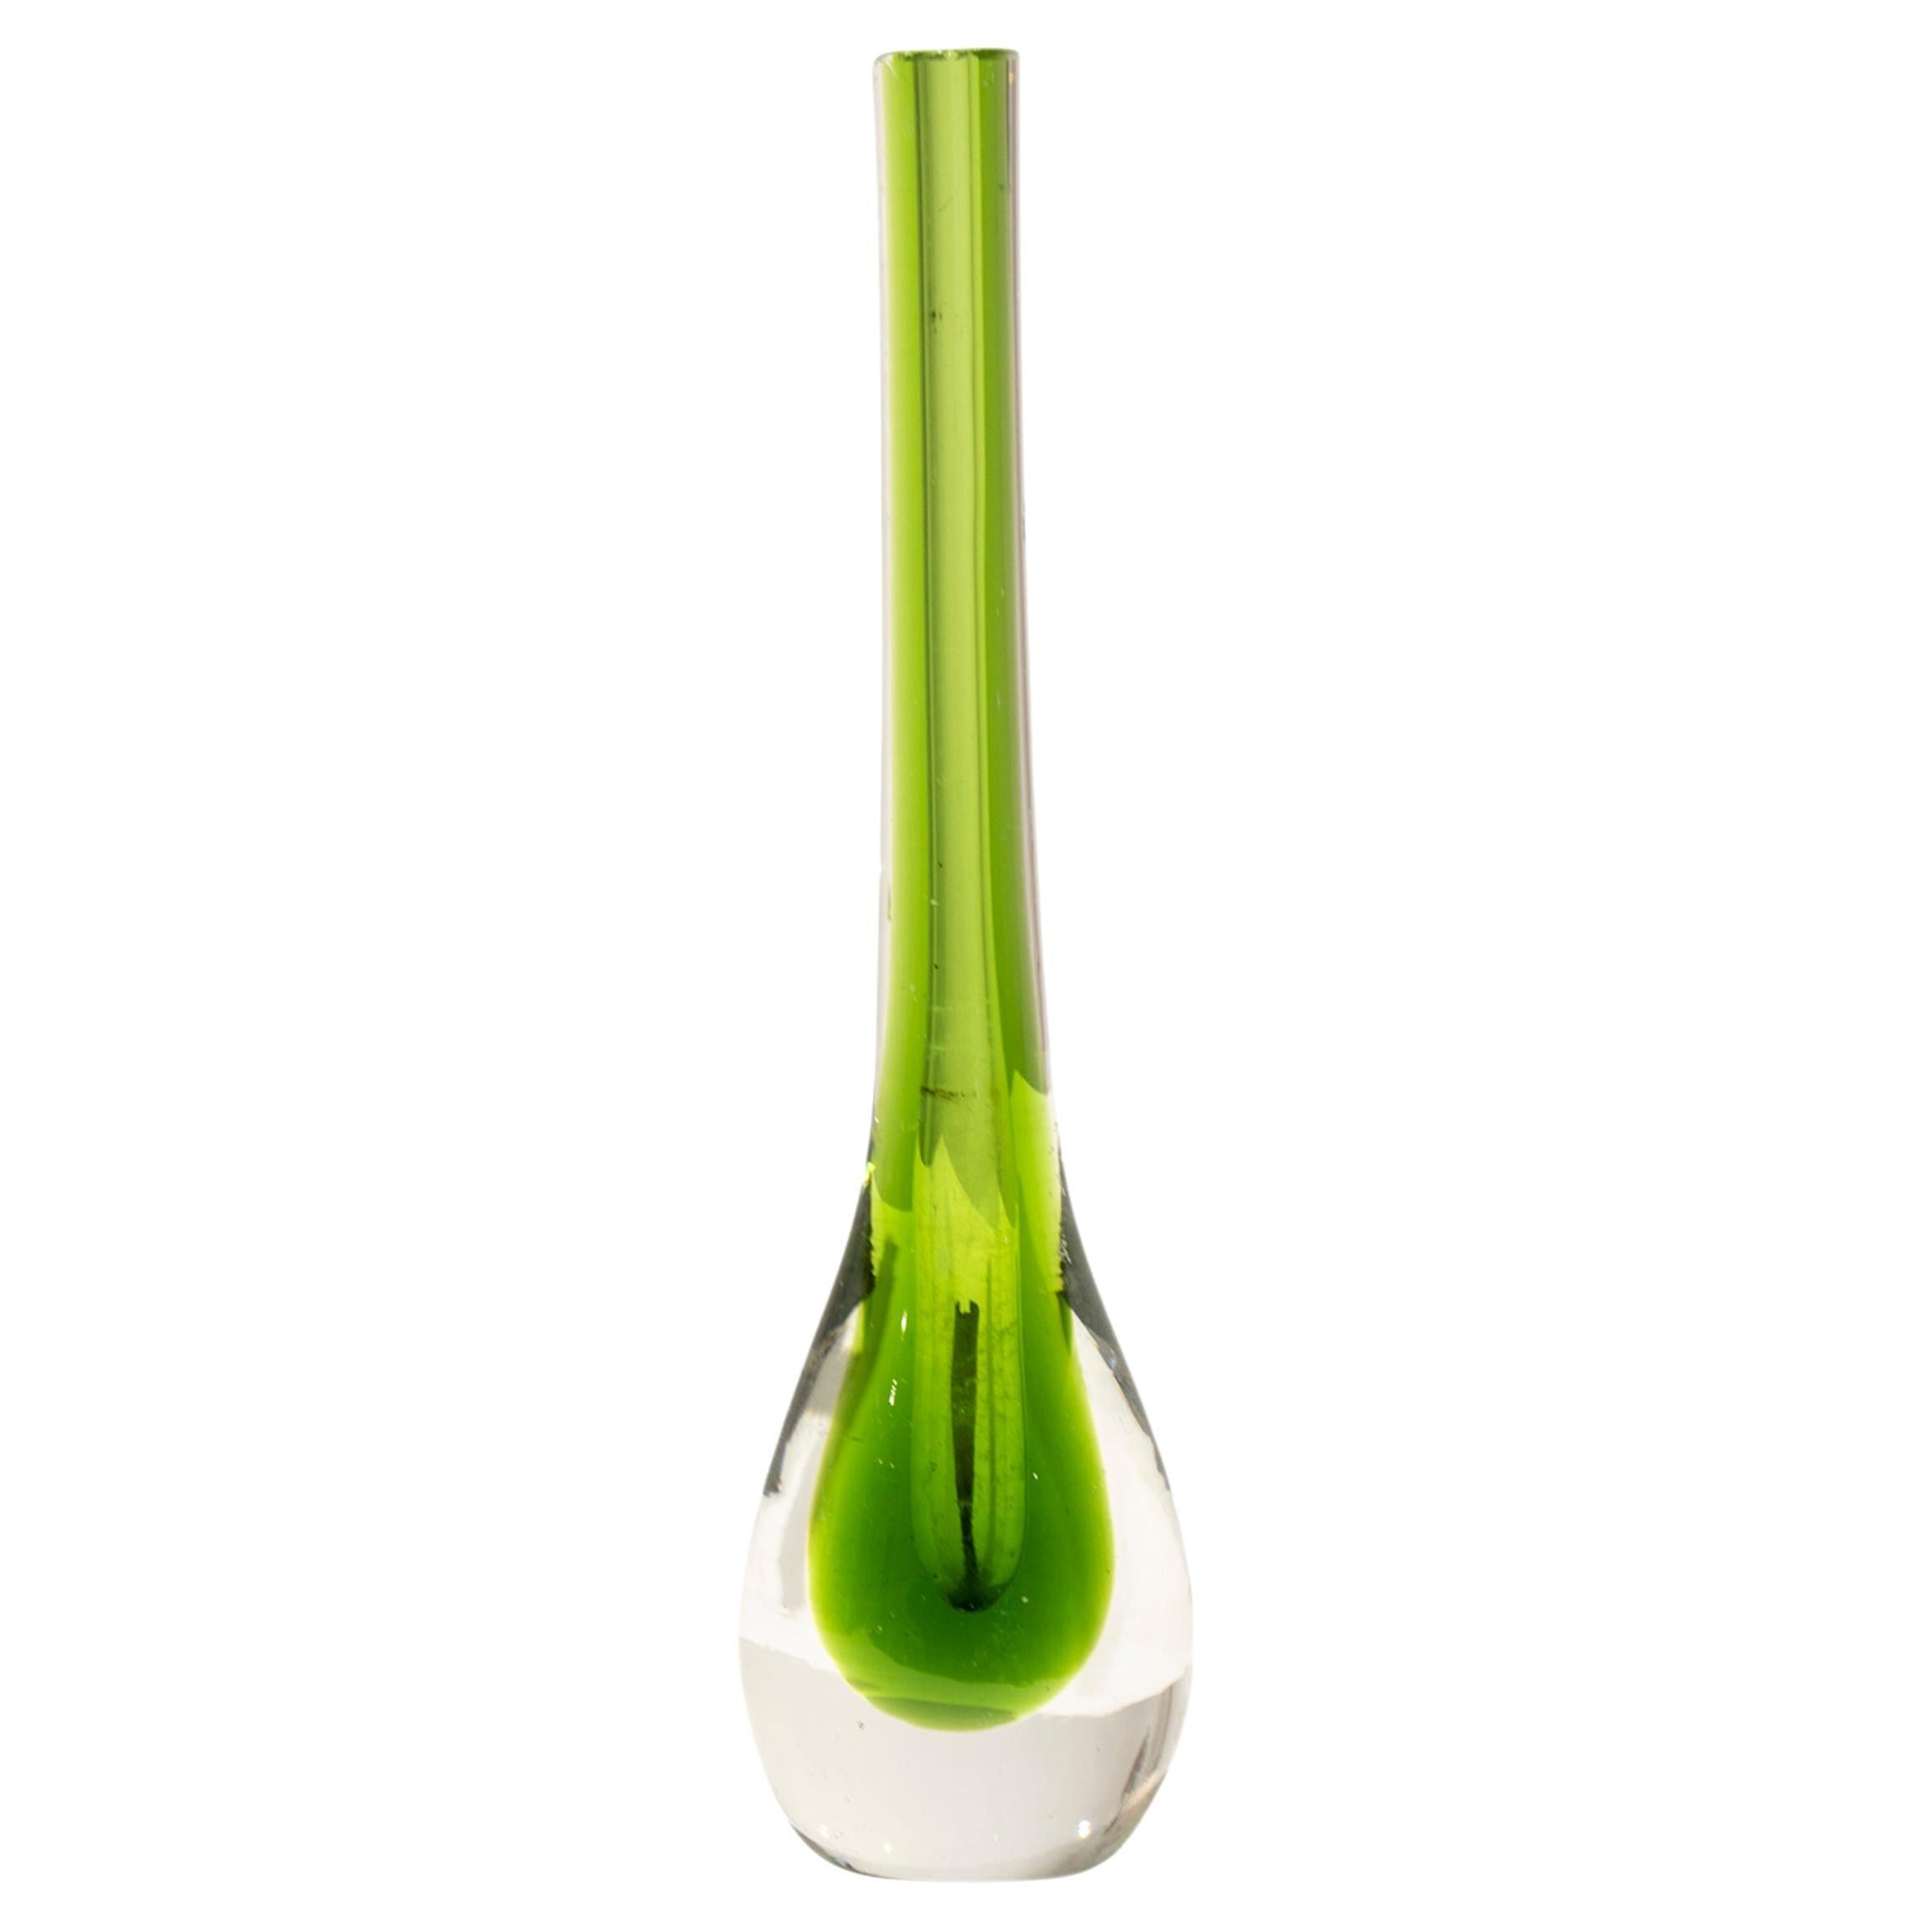 Flavio Poli Hand-Crafted Green Murano Small Glass Vase, Italy, 1970